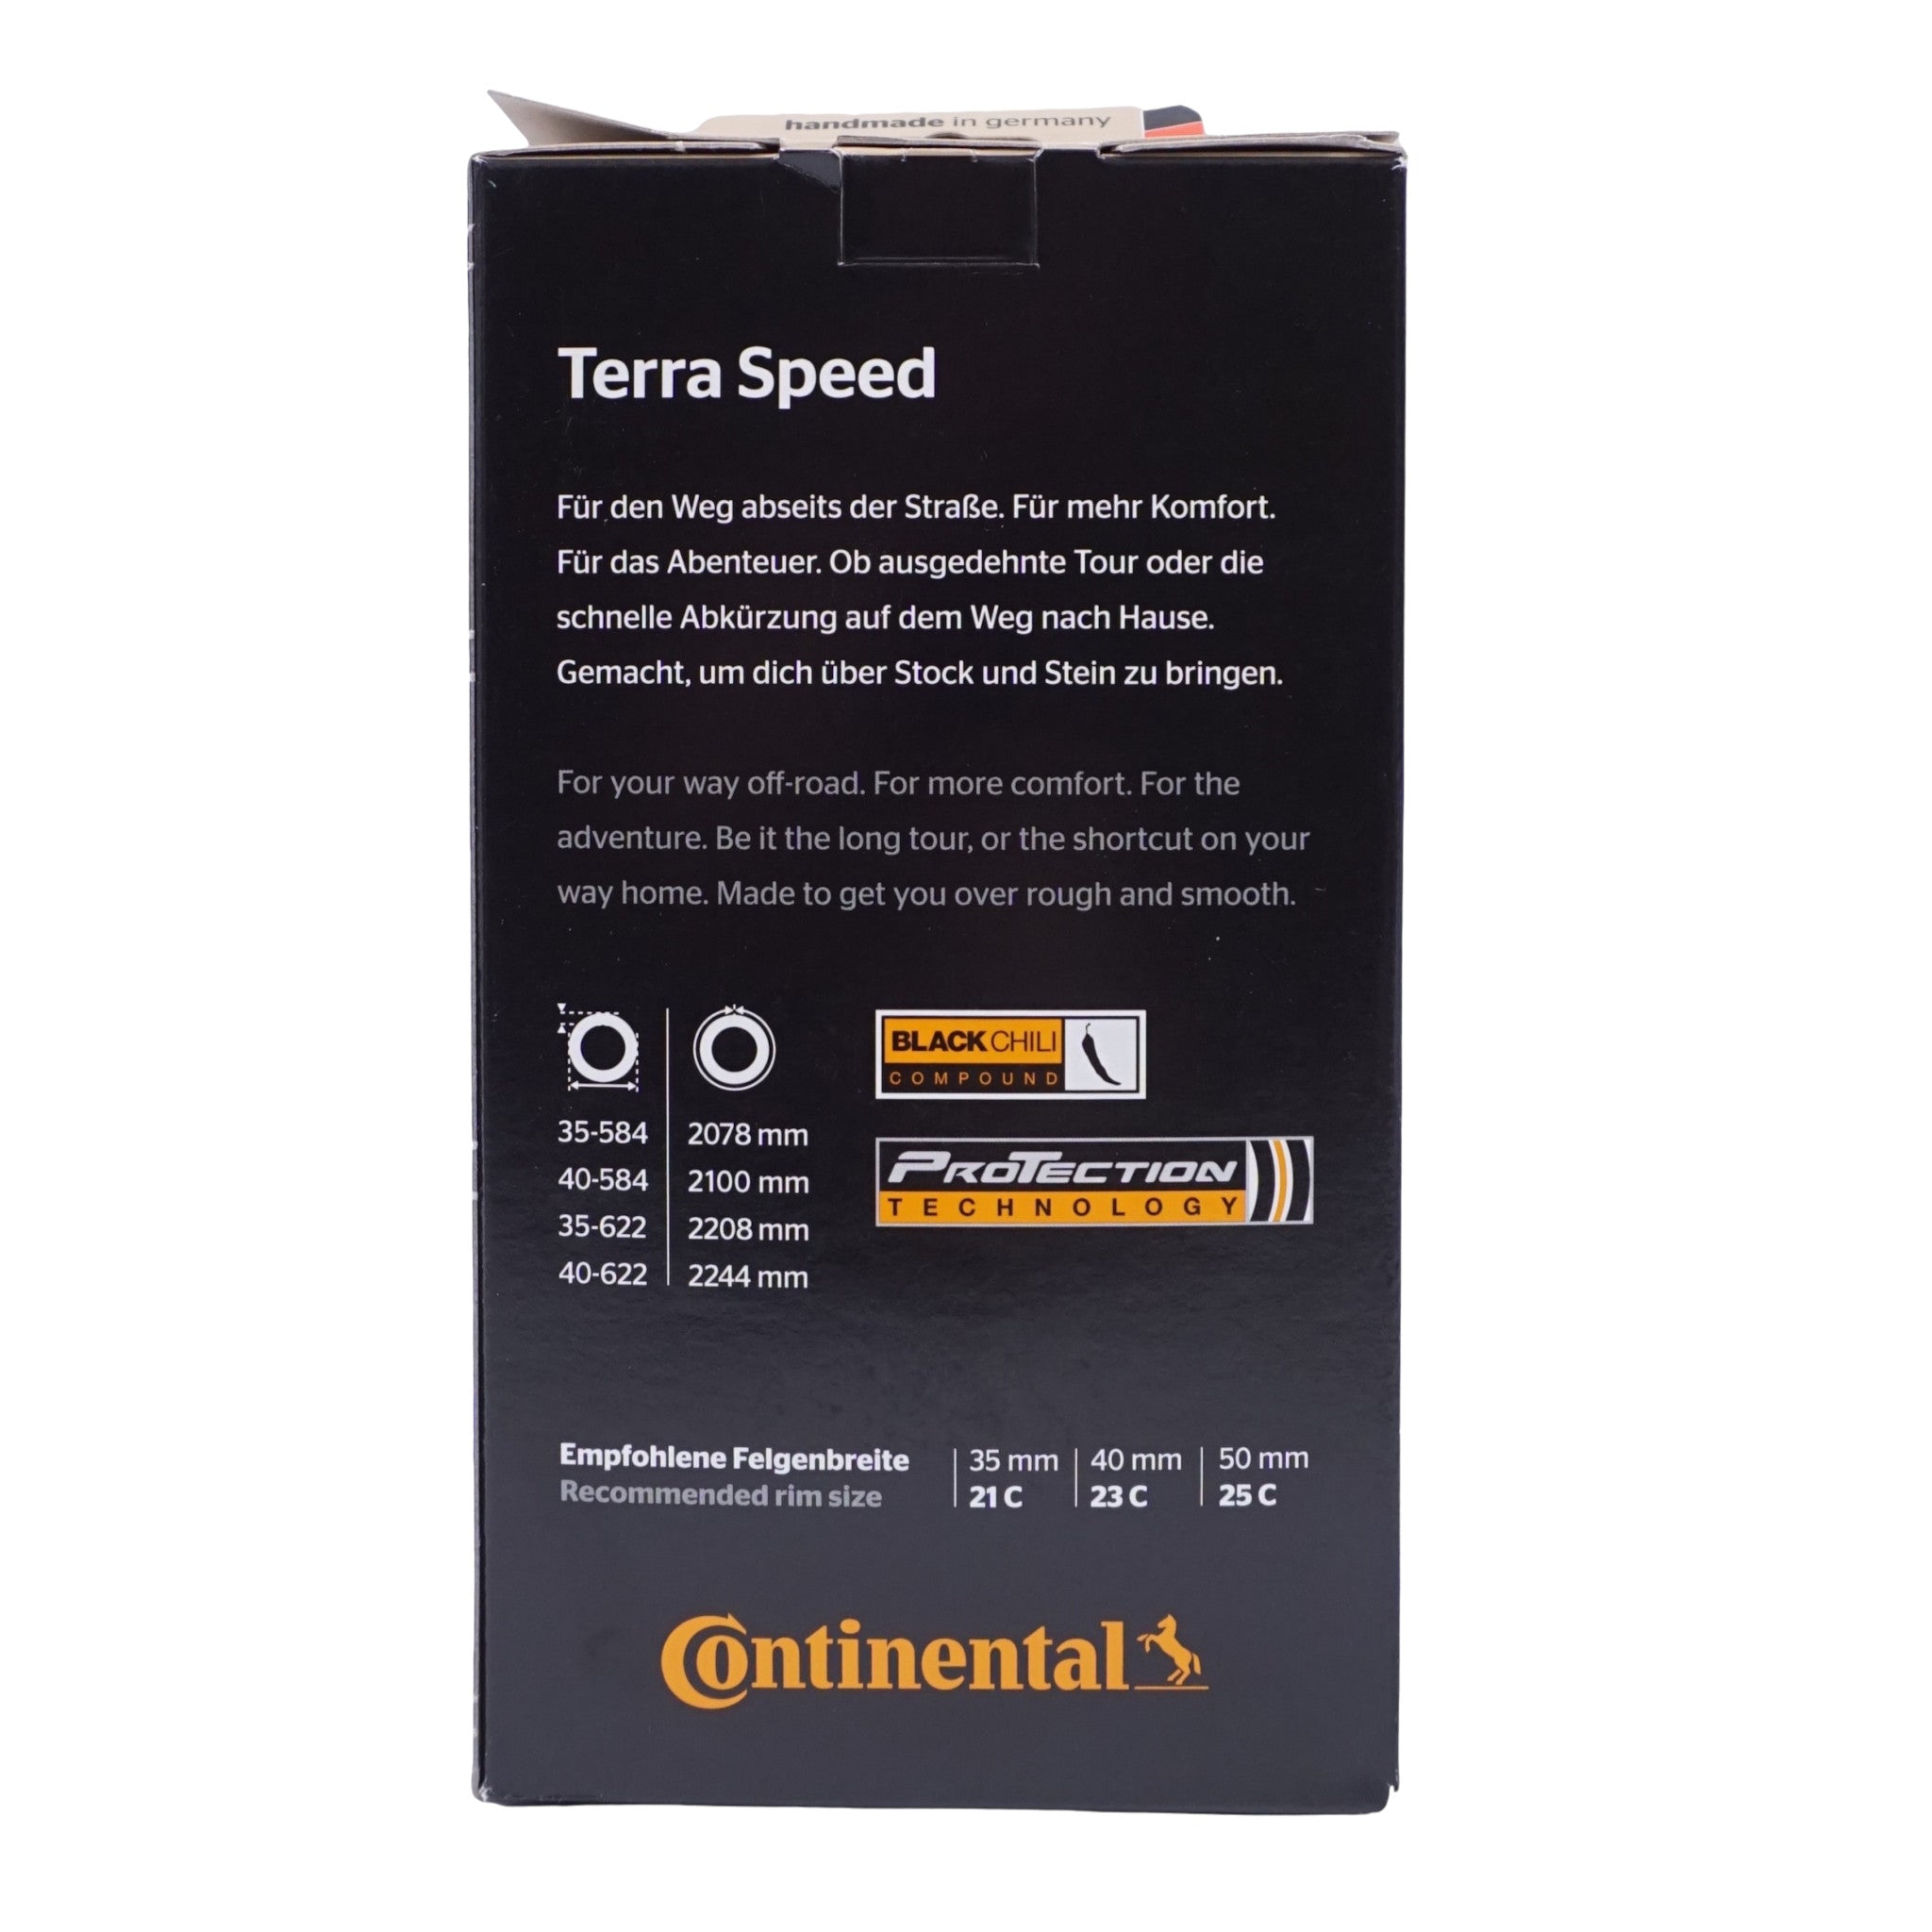 Continental Terra Speed 700c Tubeless Folding BlackChili ProTection Bike Tire